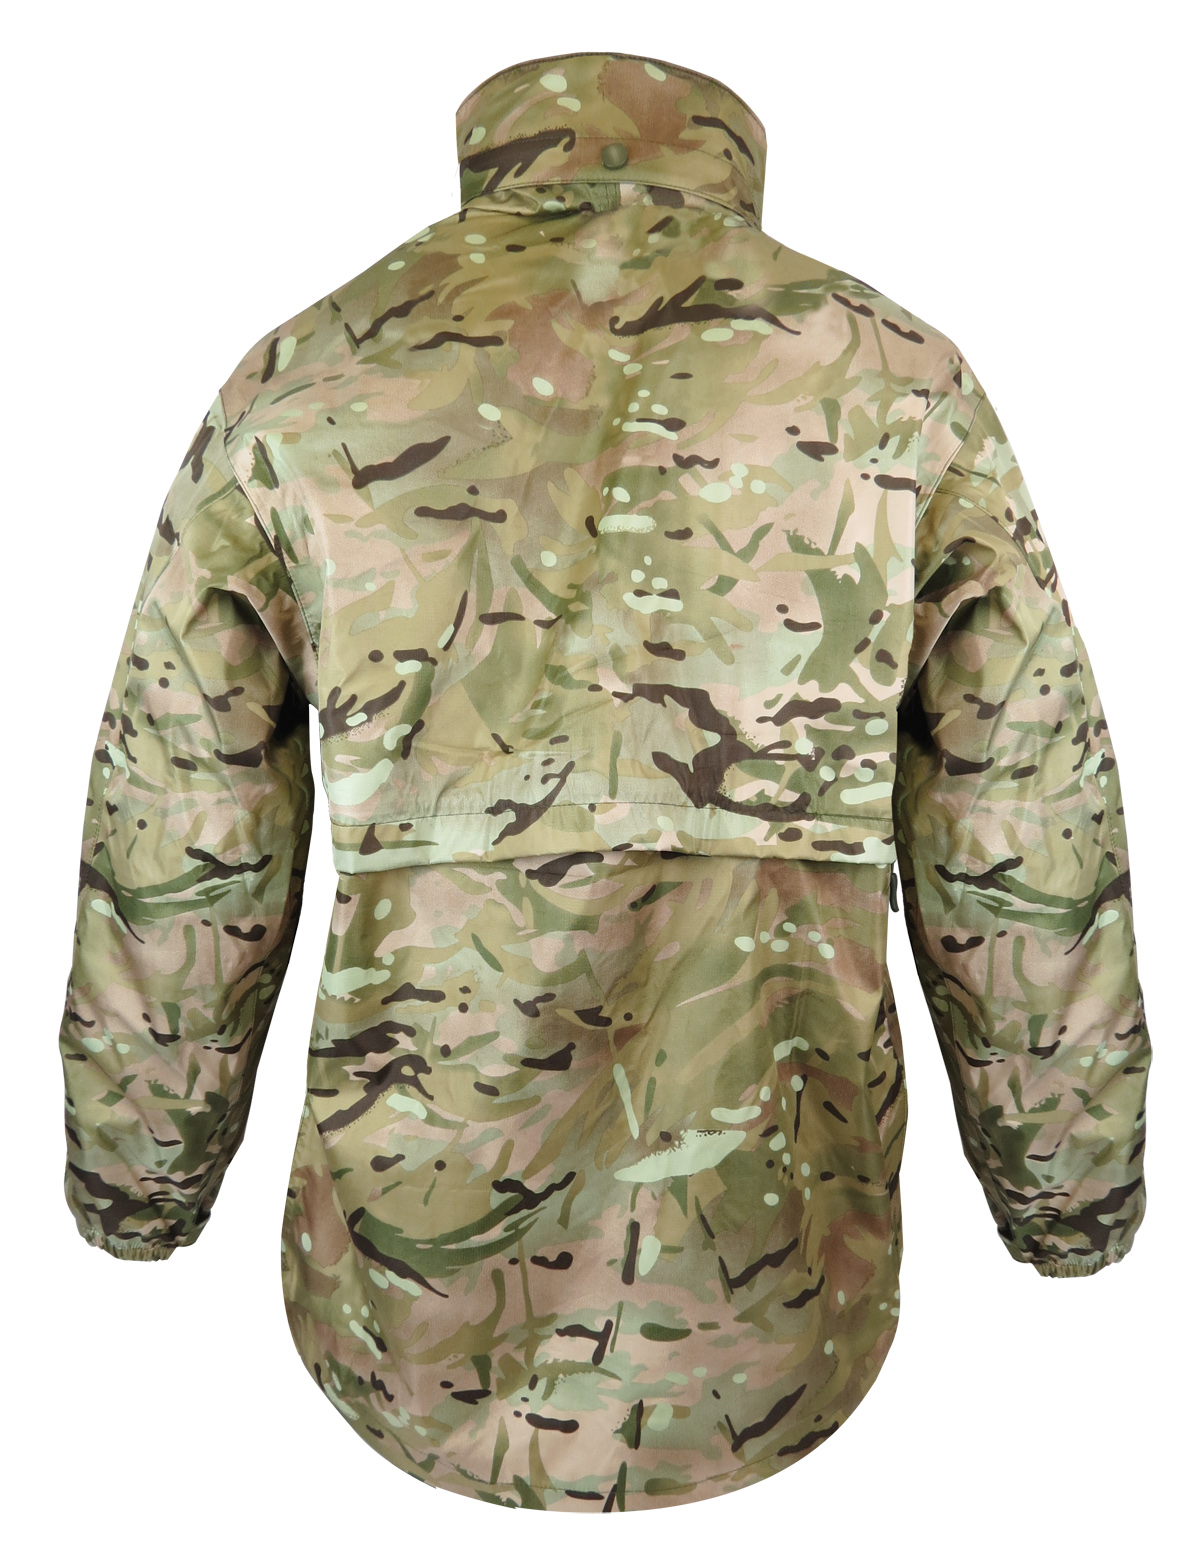 New Waterproof Breathable Jacket by Highlander